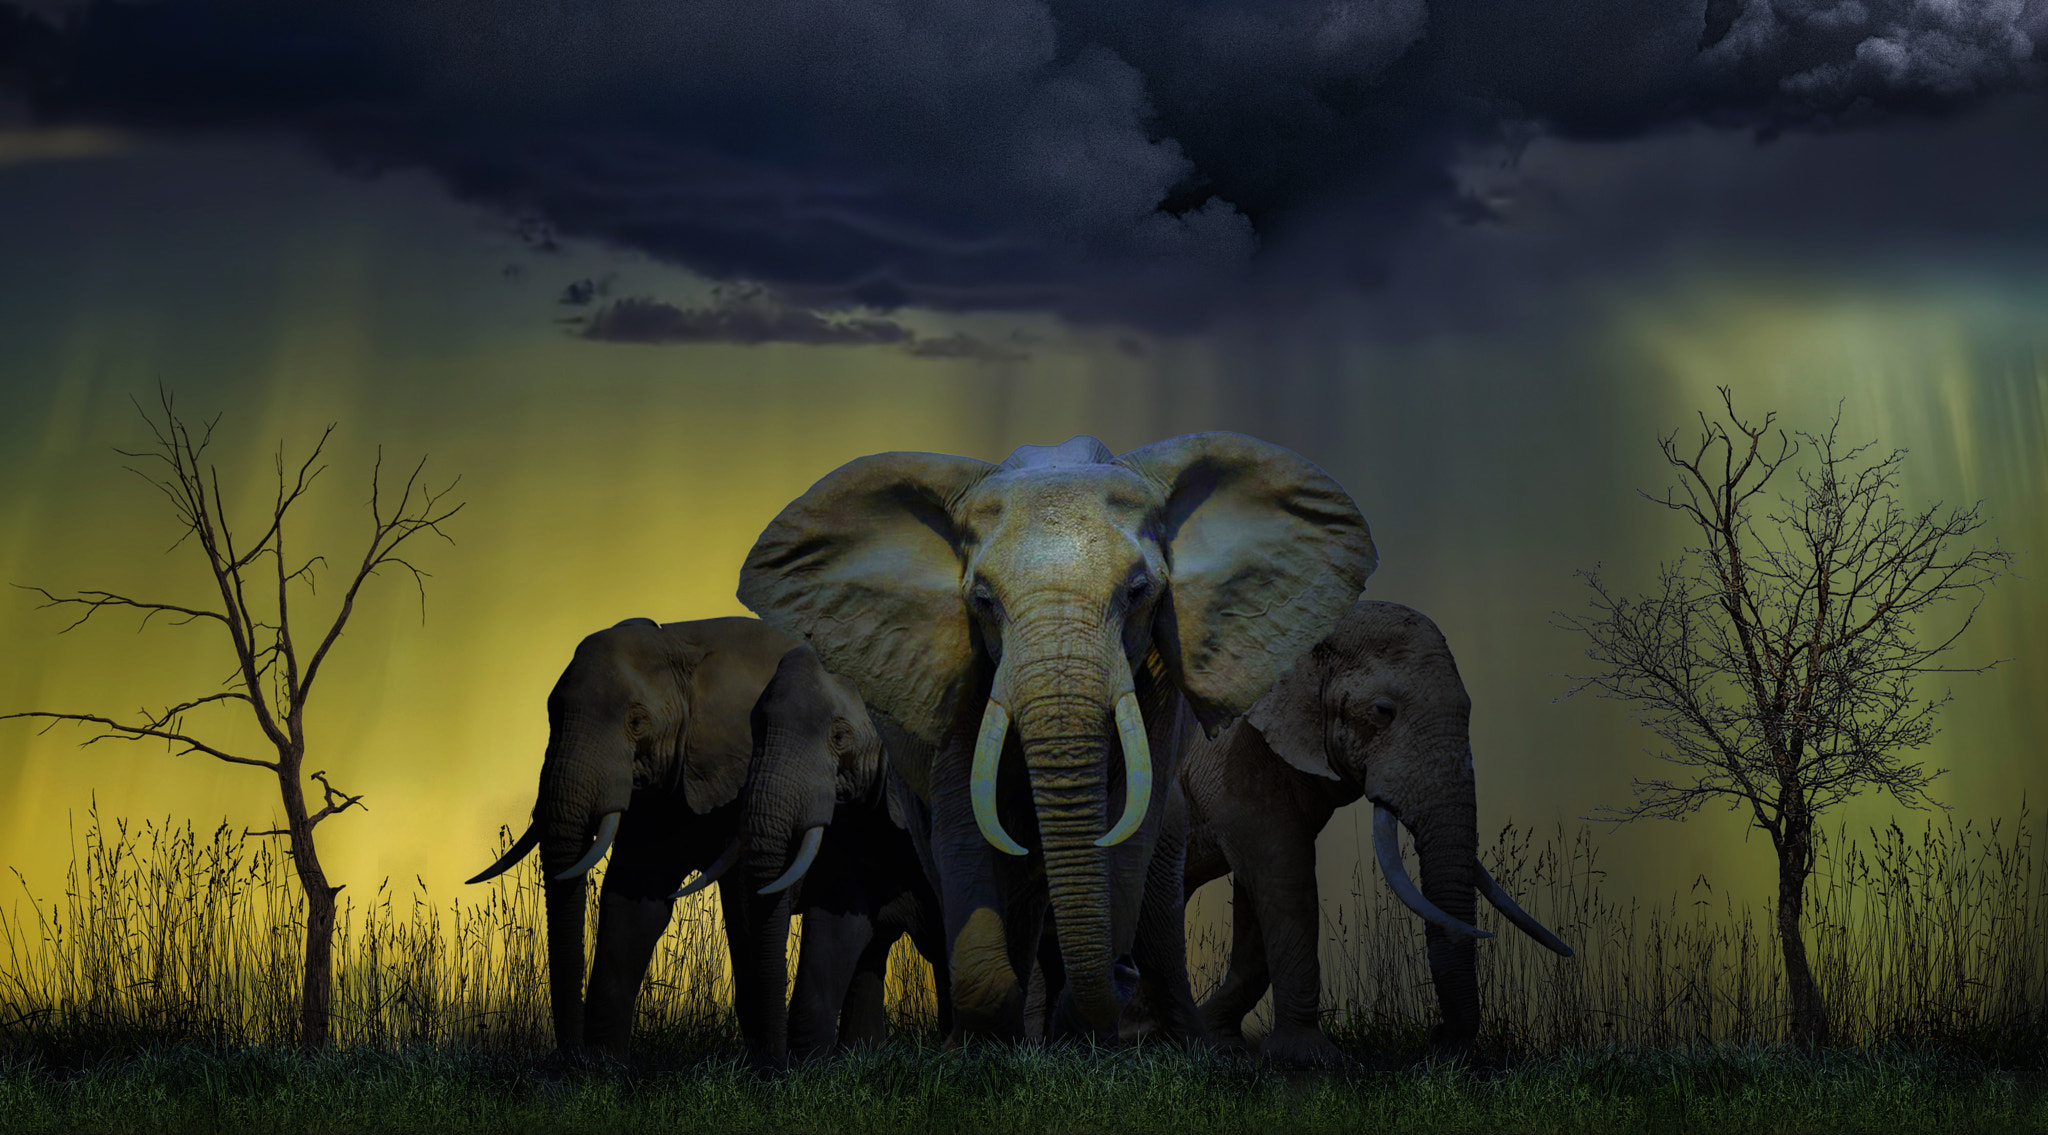 Wallpapers night moonlight elephants on the desktop